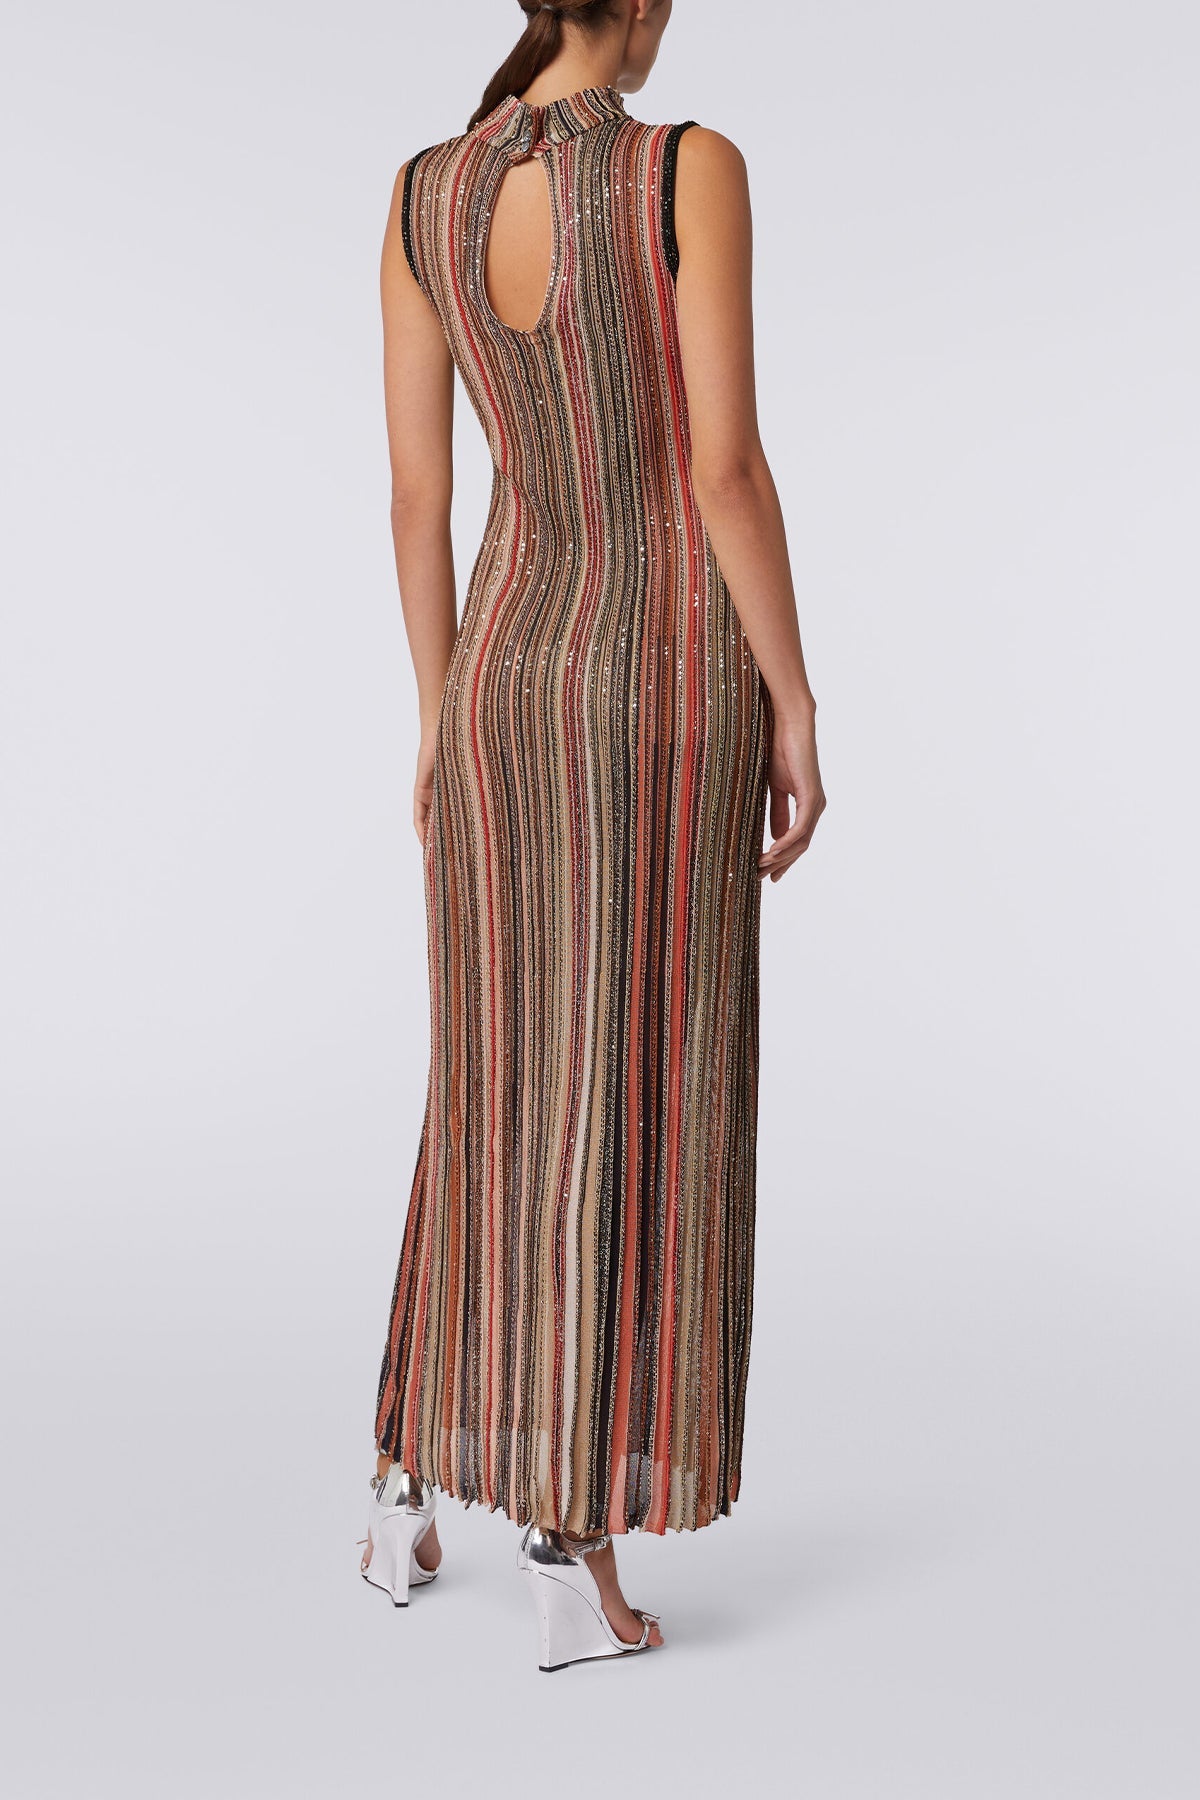 Vertical Striped Knit Sequin Dress in Multi - shop-olivia.com